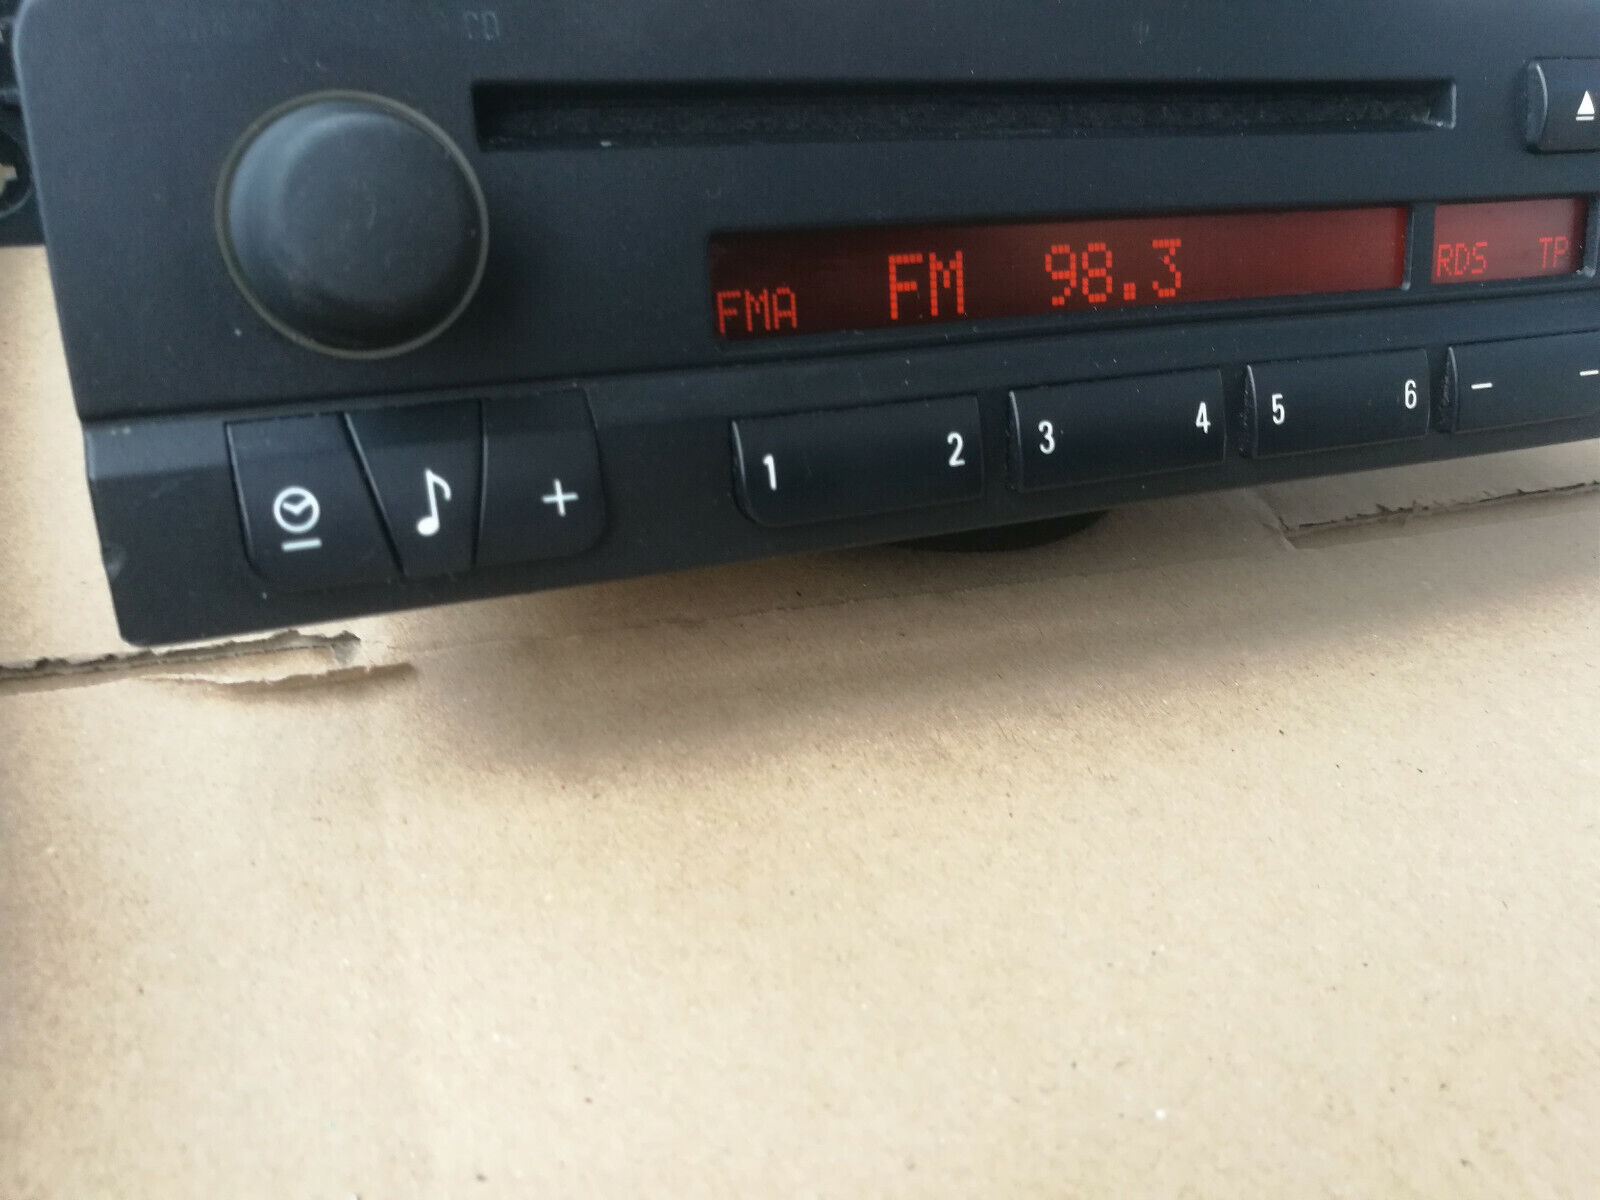 Bm193U) 2000-2003 BMW E53 E46 X5 3 Series Touch Screen Navigation Cassette  Radio Player OEM